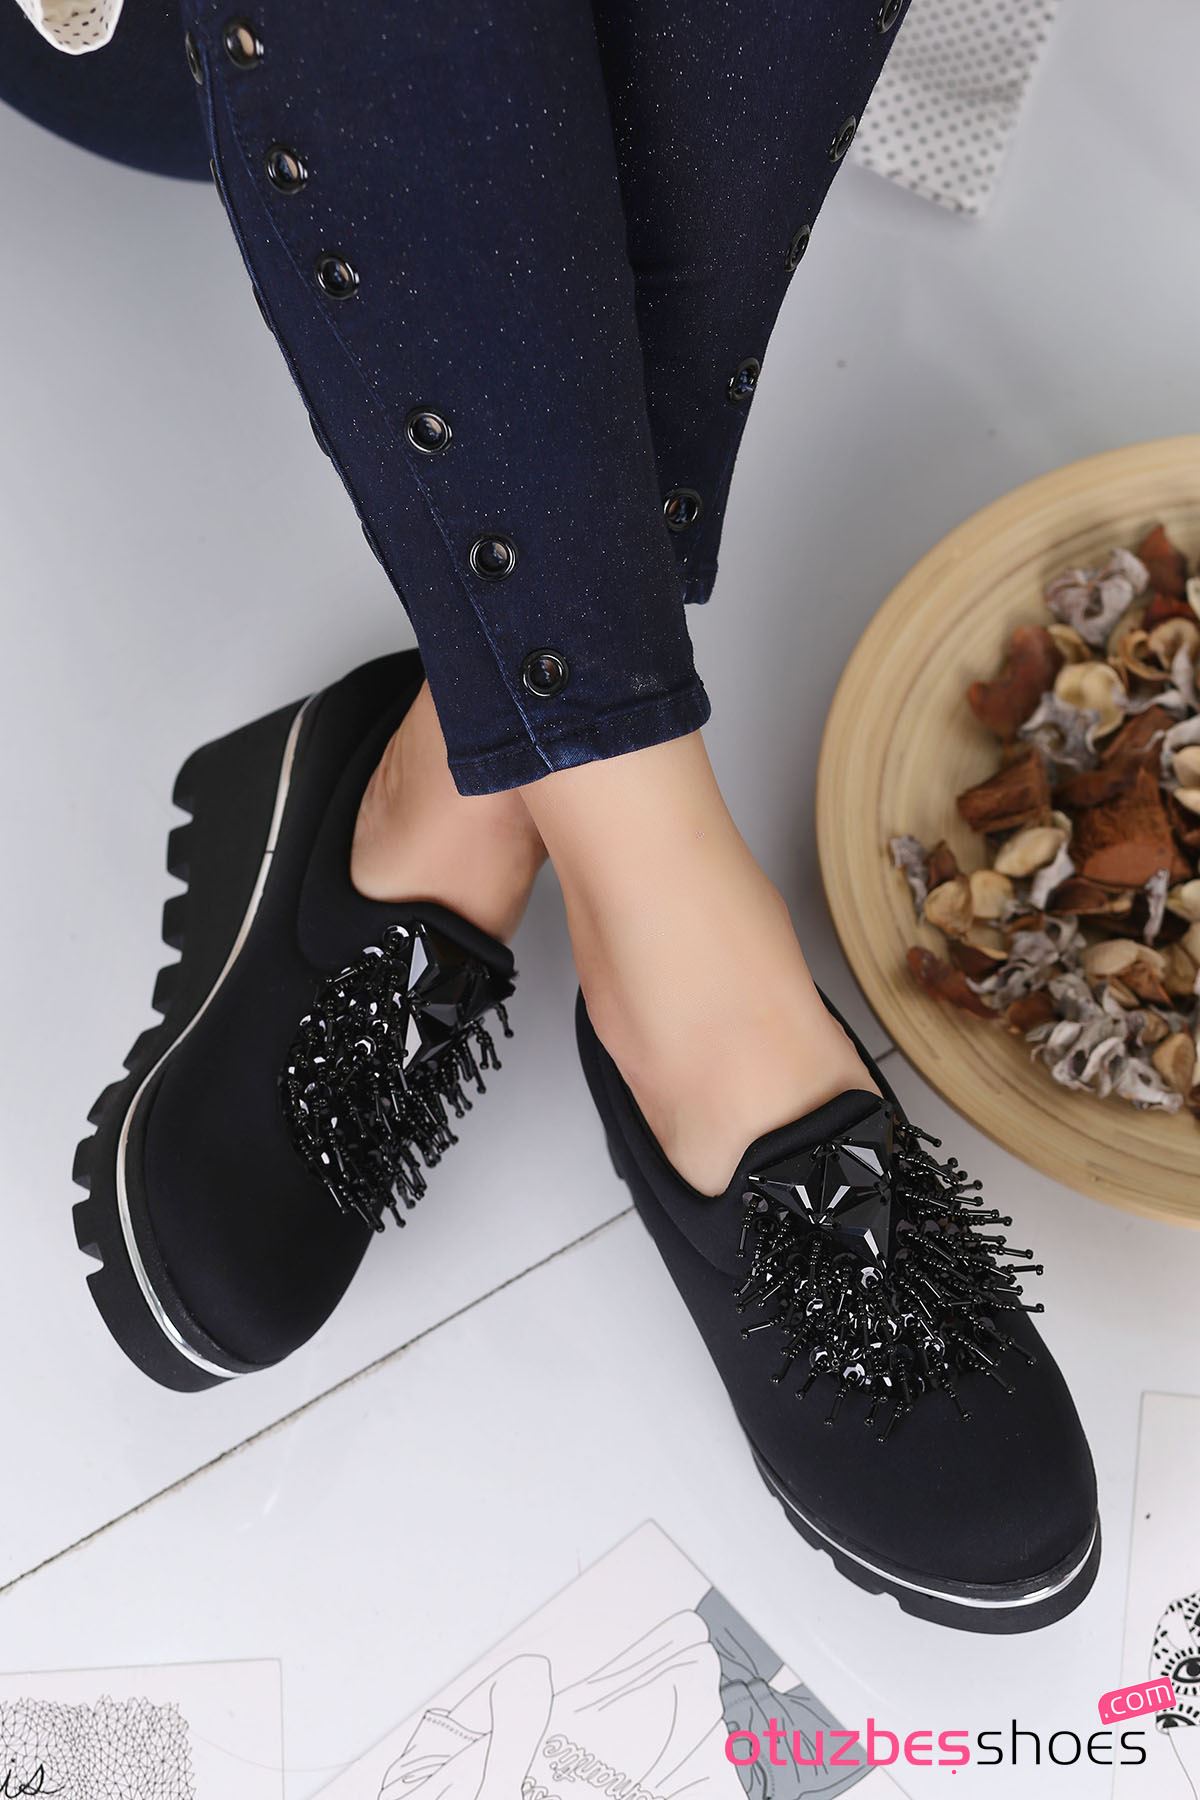 Bratz Püskül Detay Dalgıç Kumaş Dolgu Topuk Ayakkabı Siyah